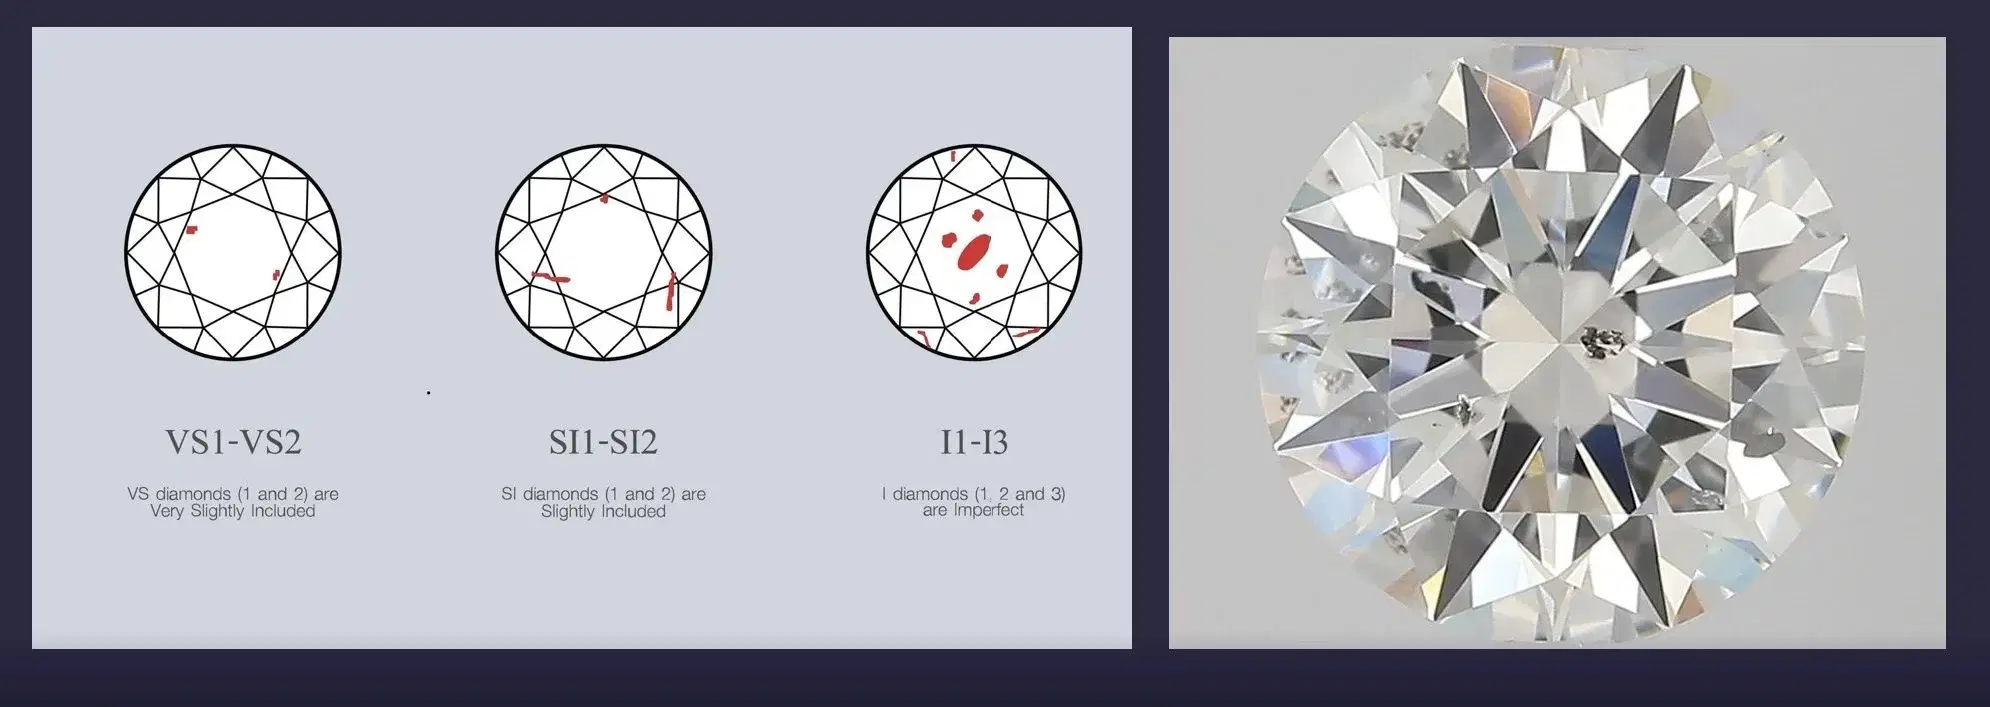 Diamond Clarity Characterizes